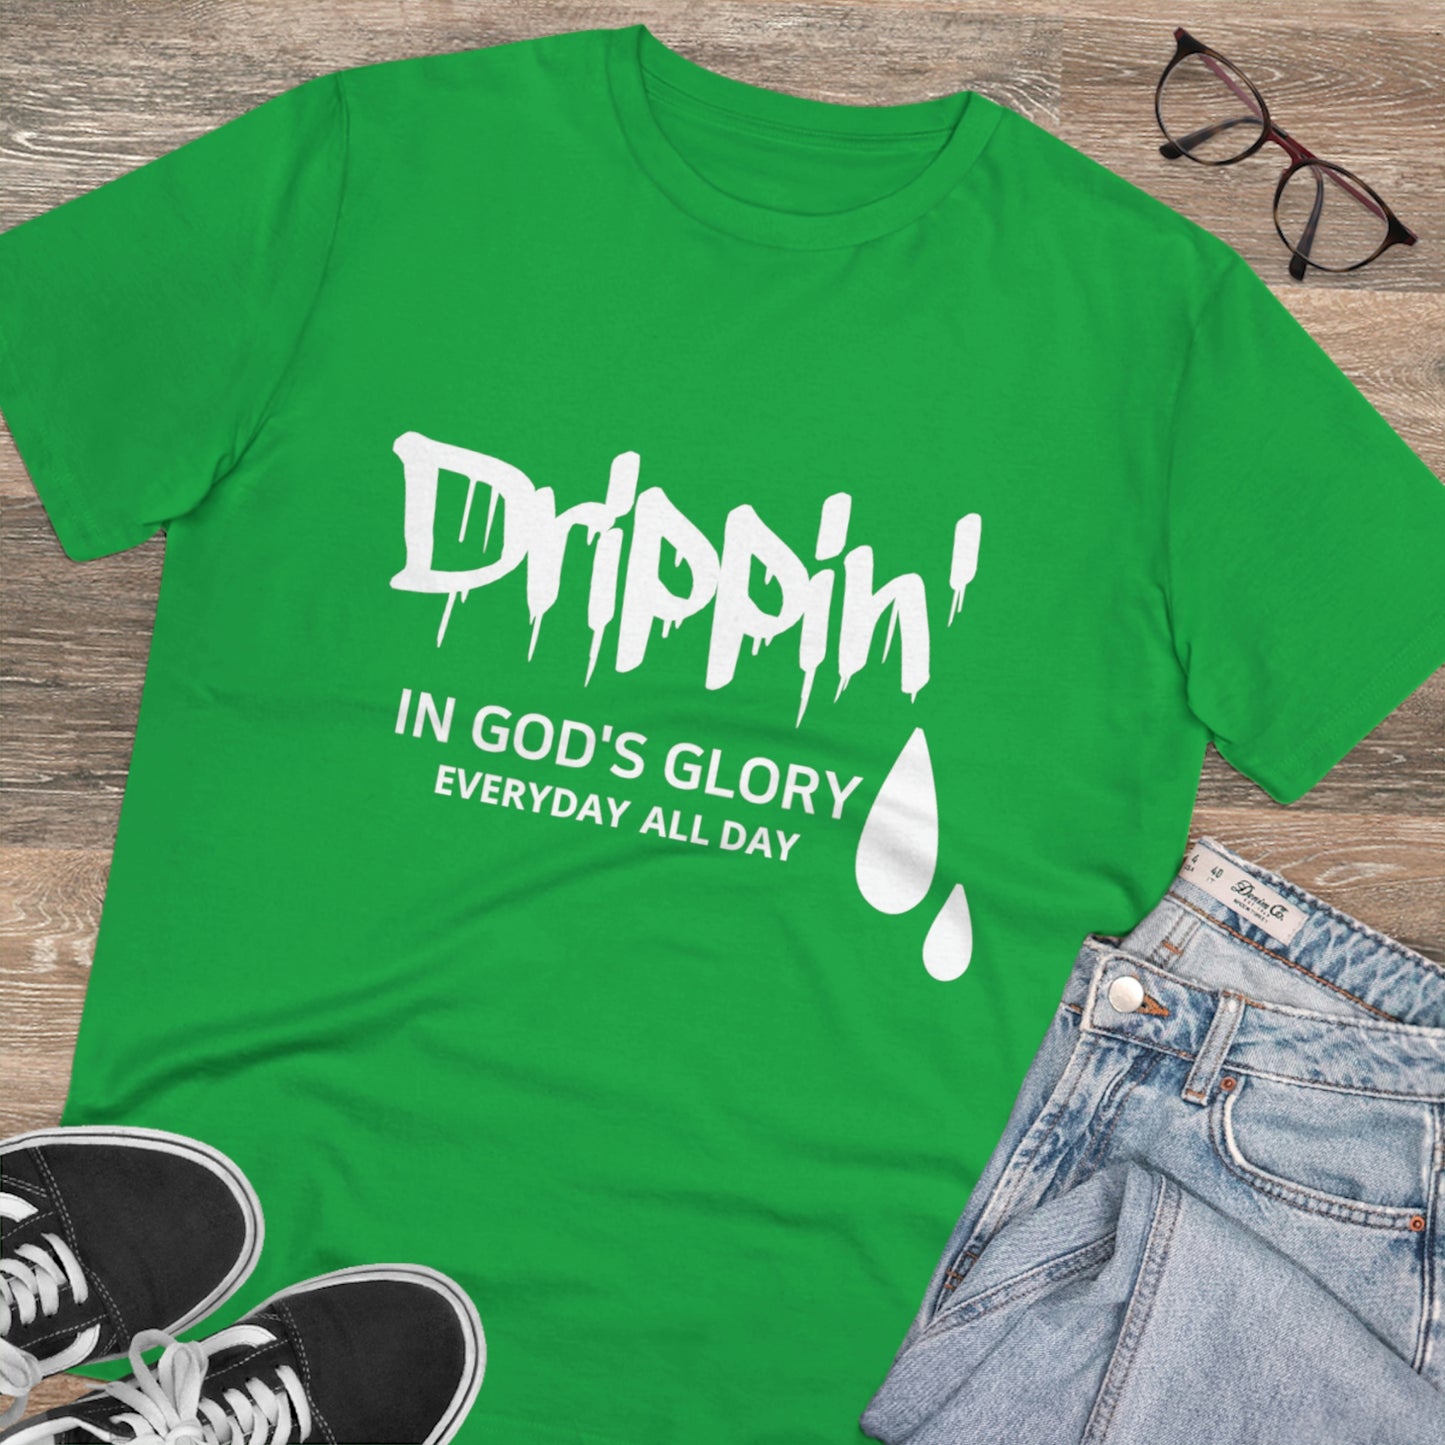 Drippin' in God's Glory